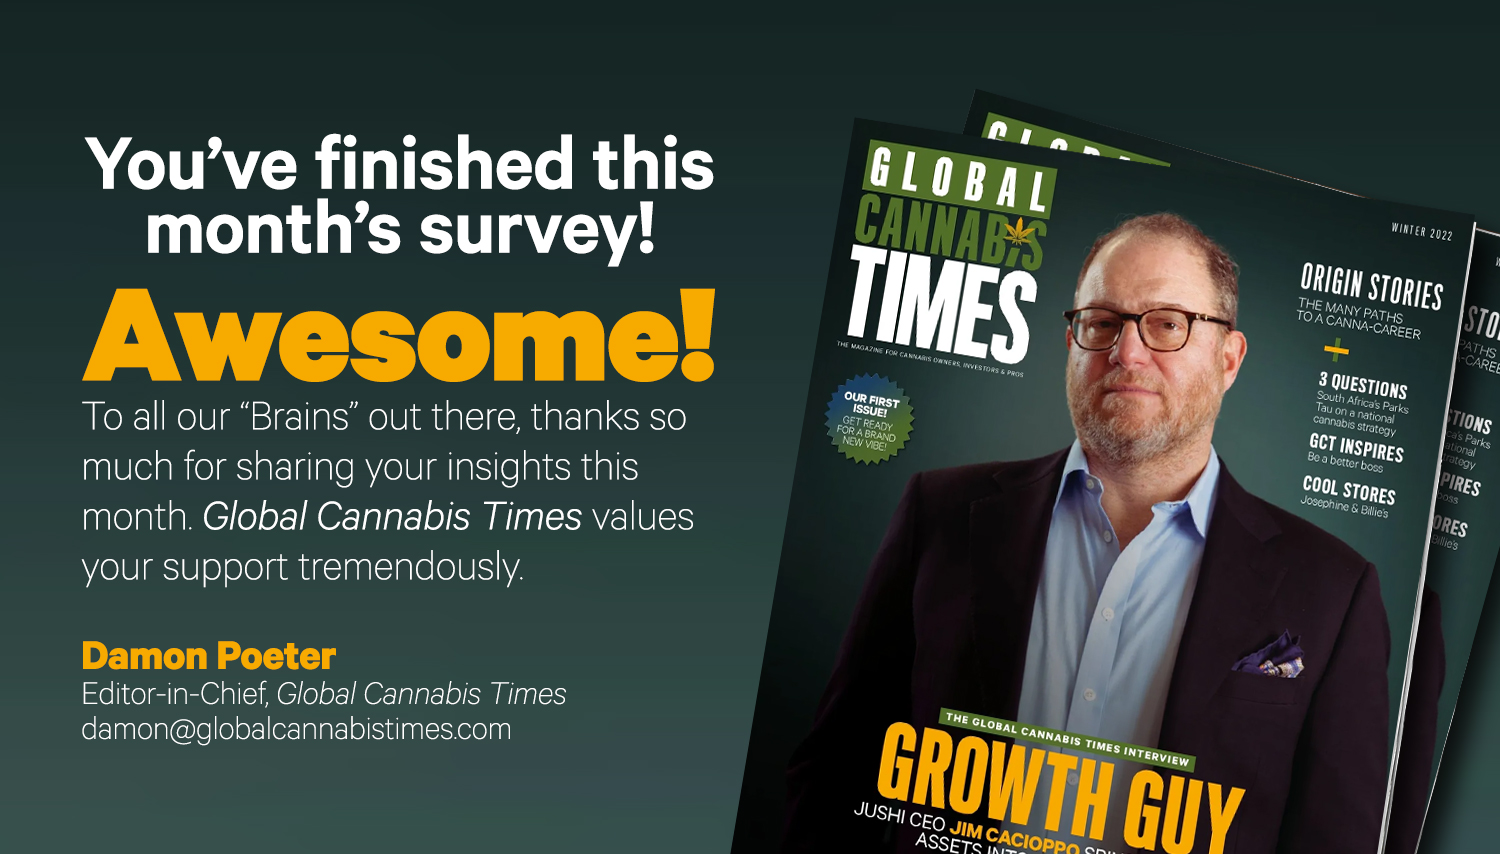 Damon Poeter,
Editor-in-Chief, Global Cannabis Times